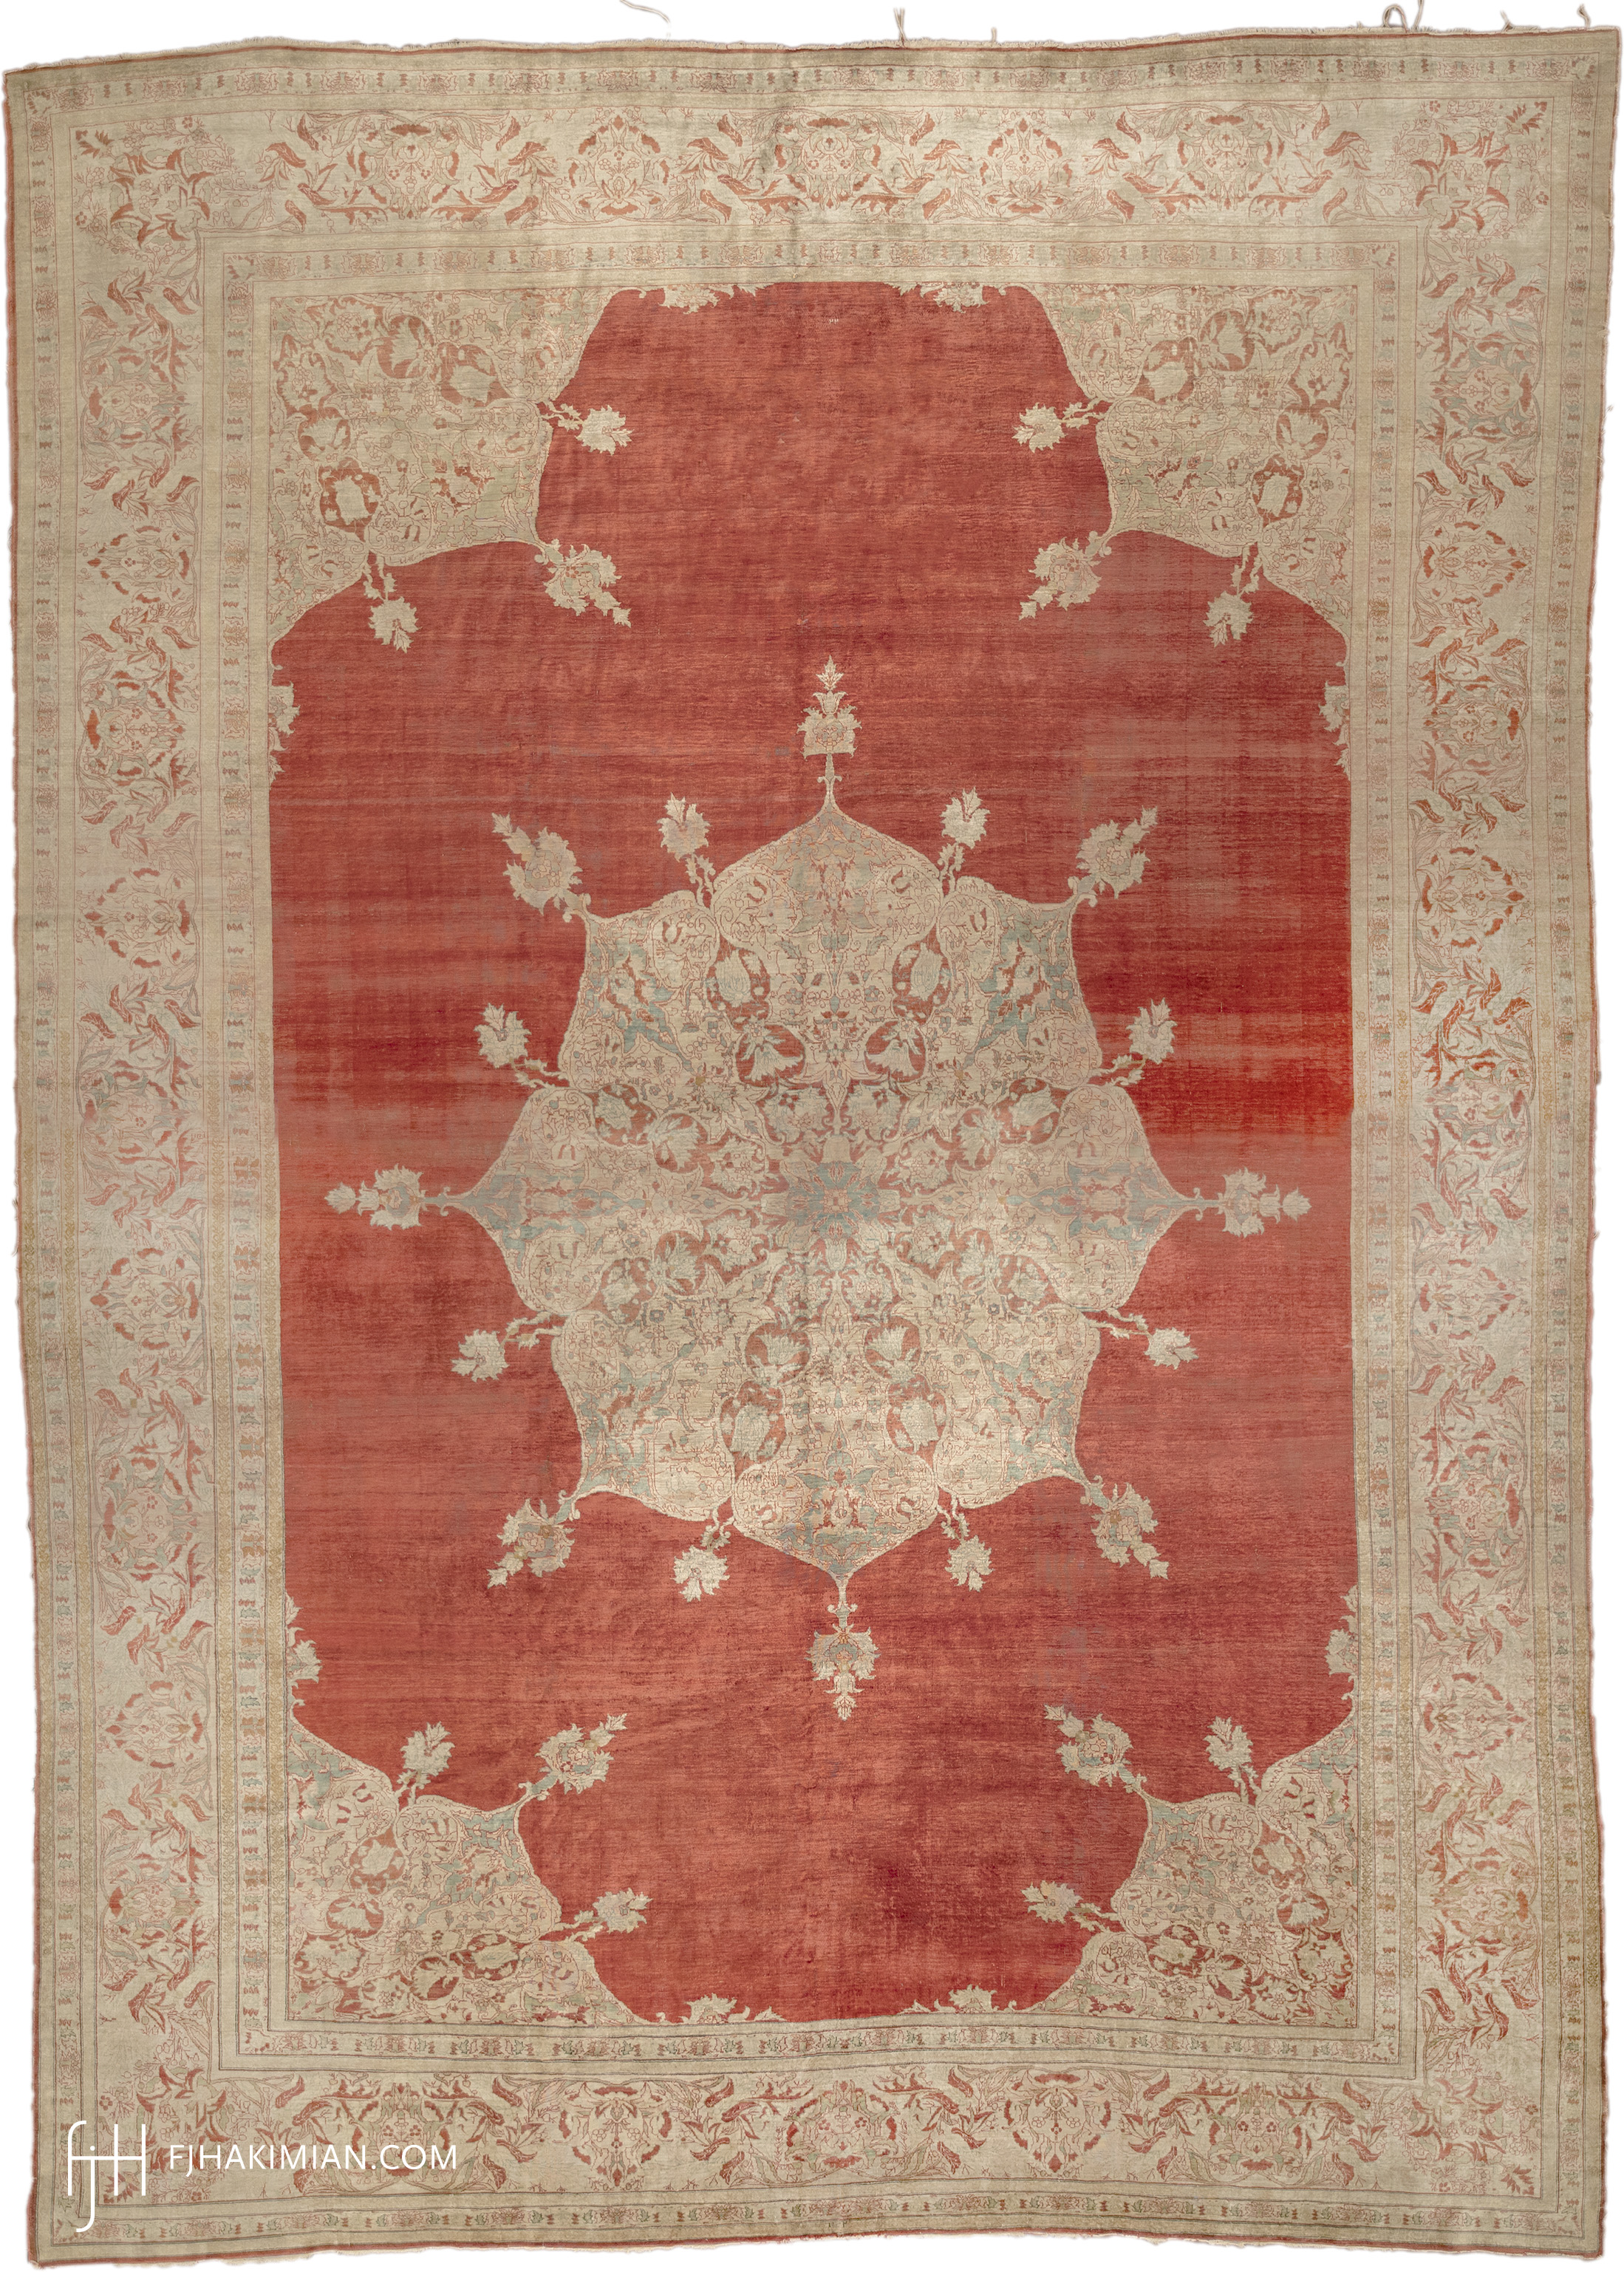 FJ Hakimian | 07021 | Antique Carpet